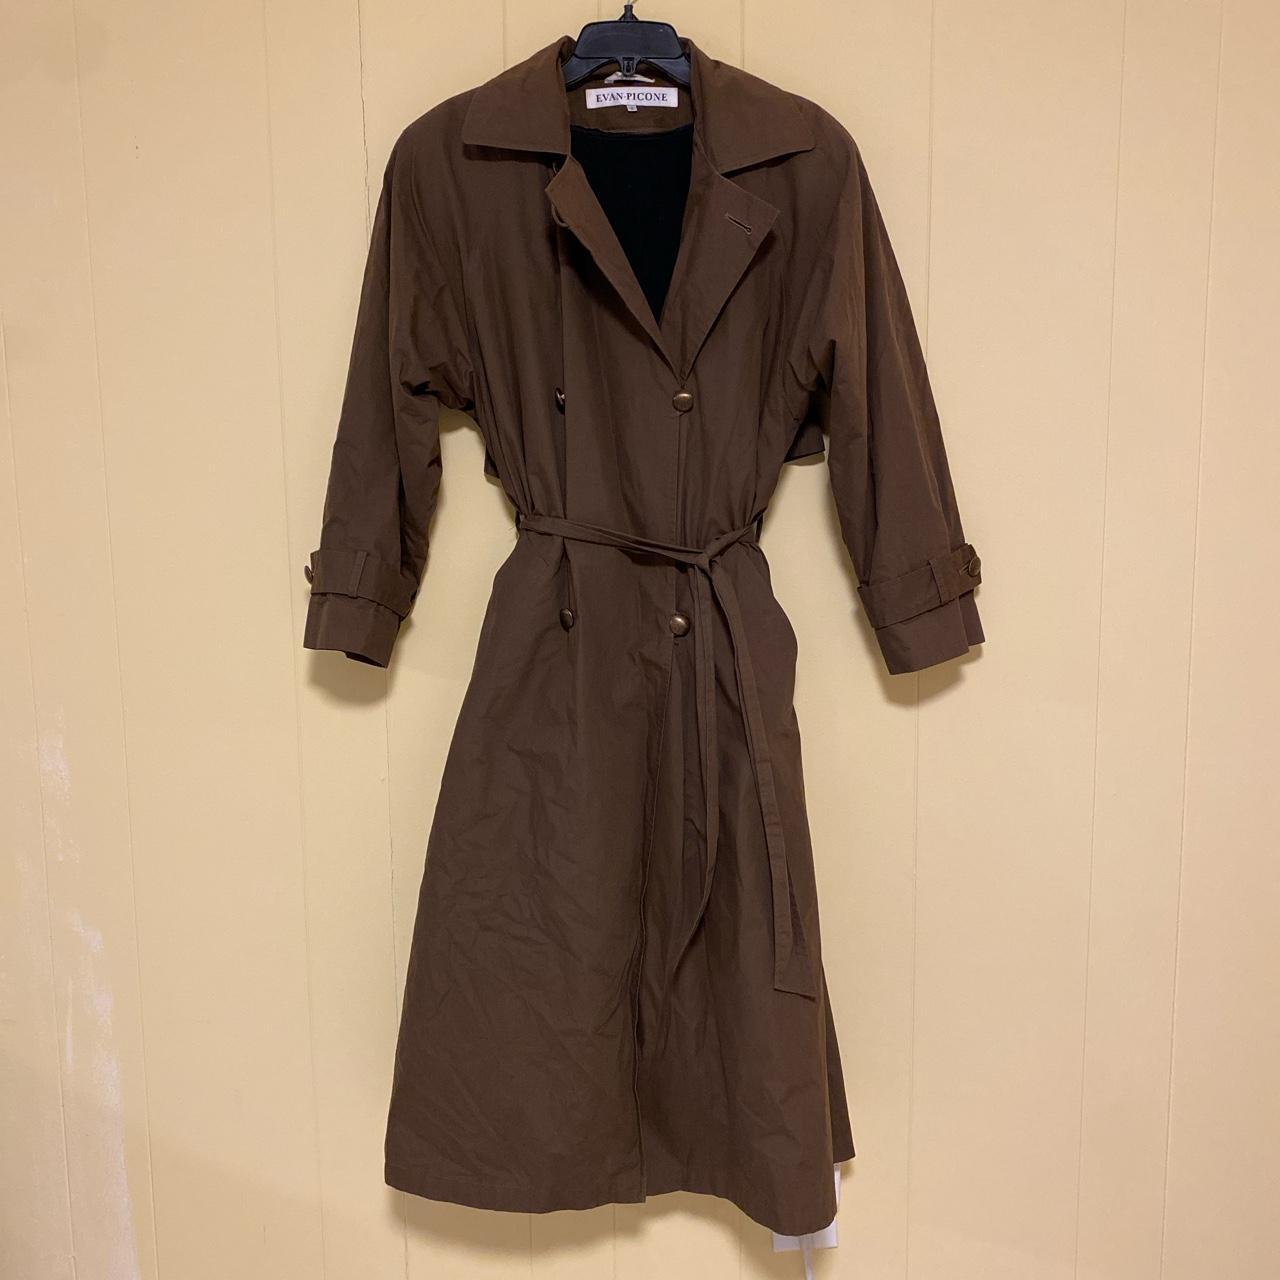 Vintage wool coat, 70s vintage style with removable... - Depop